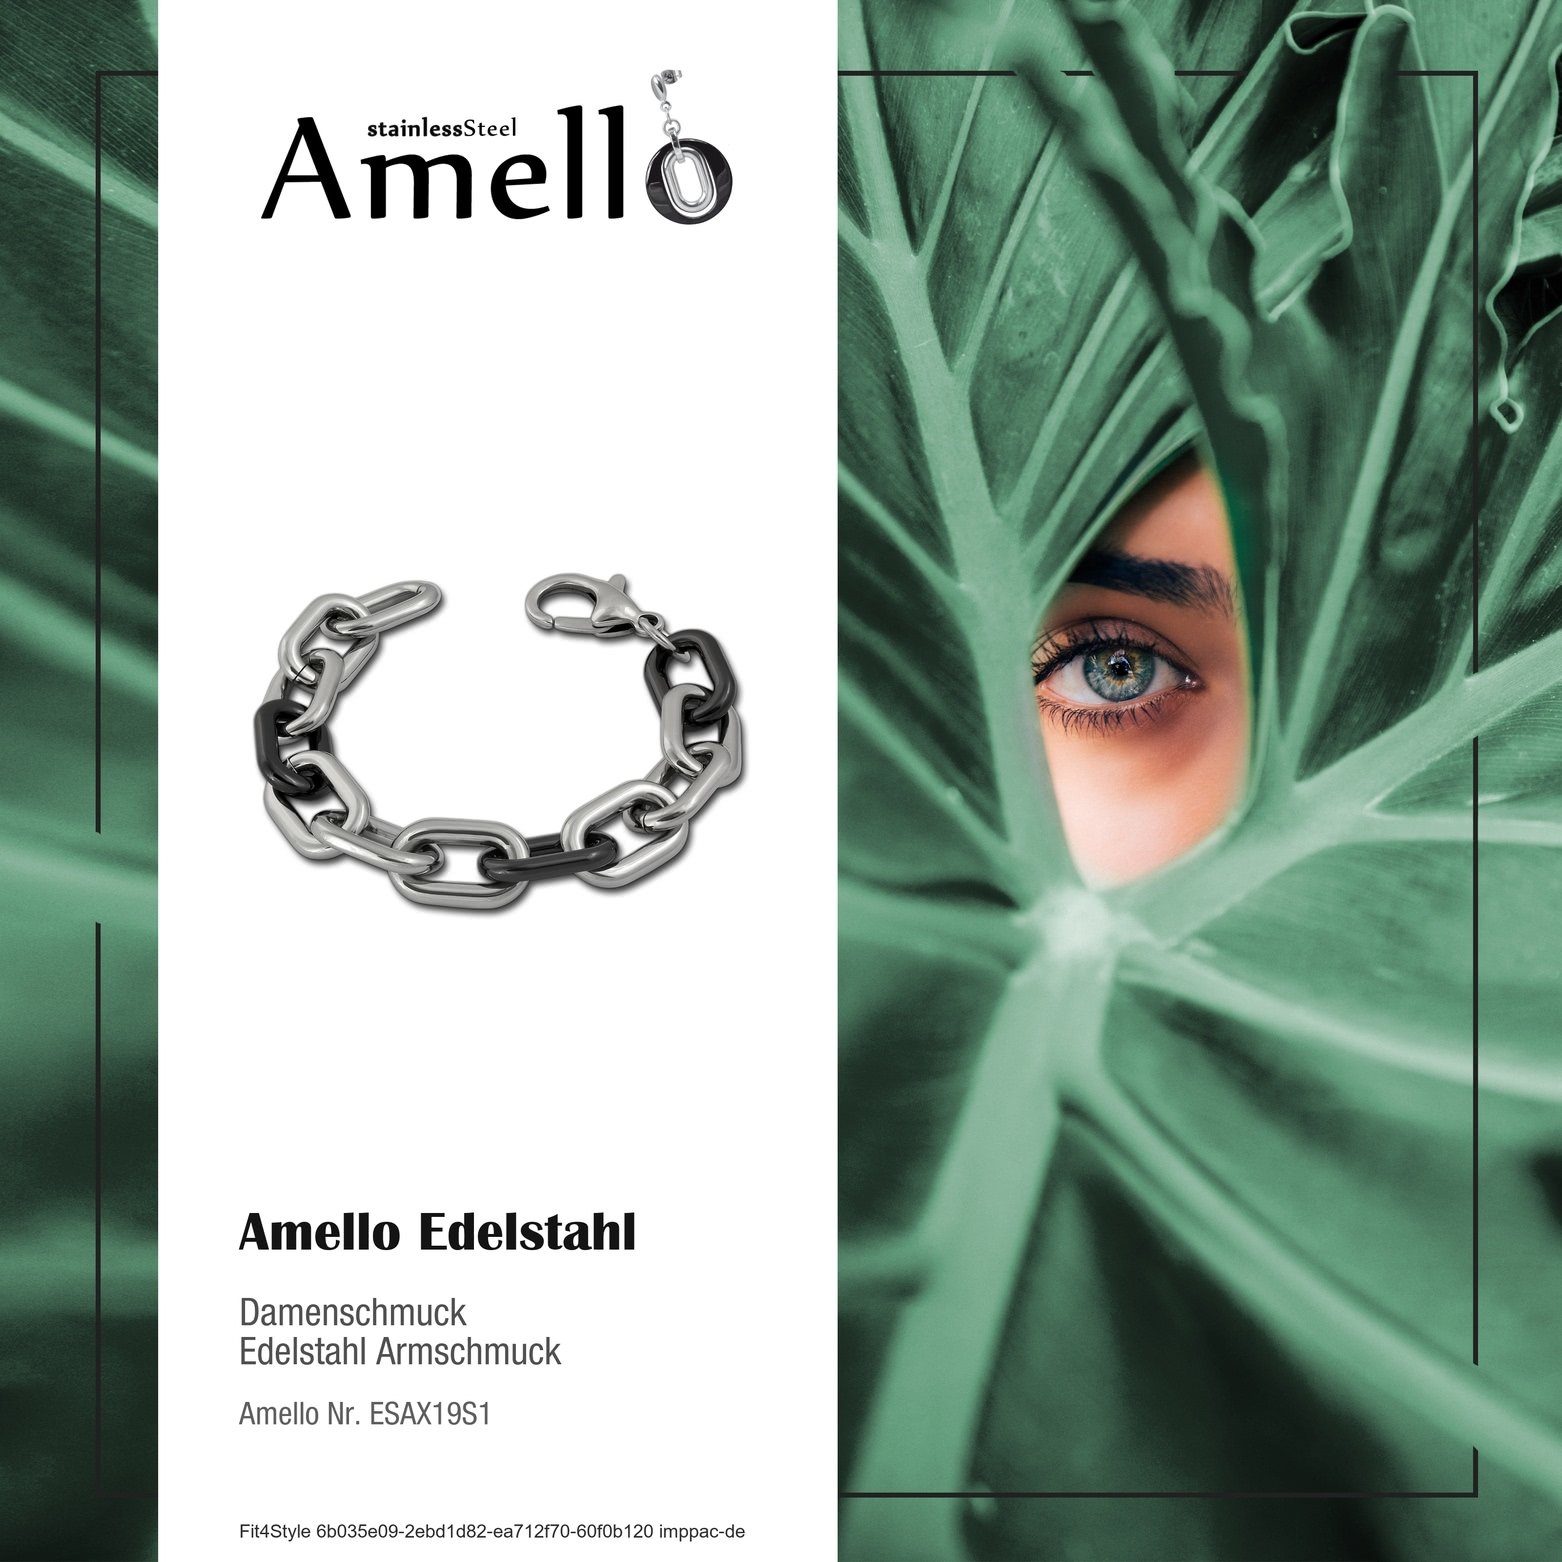 Amello Edelstahlarmband Steel) Amello Edelstahl Glieder silber Damen Armbänder (Stainless (Armband), für Armband